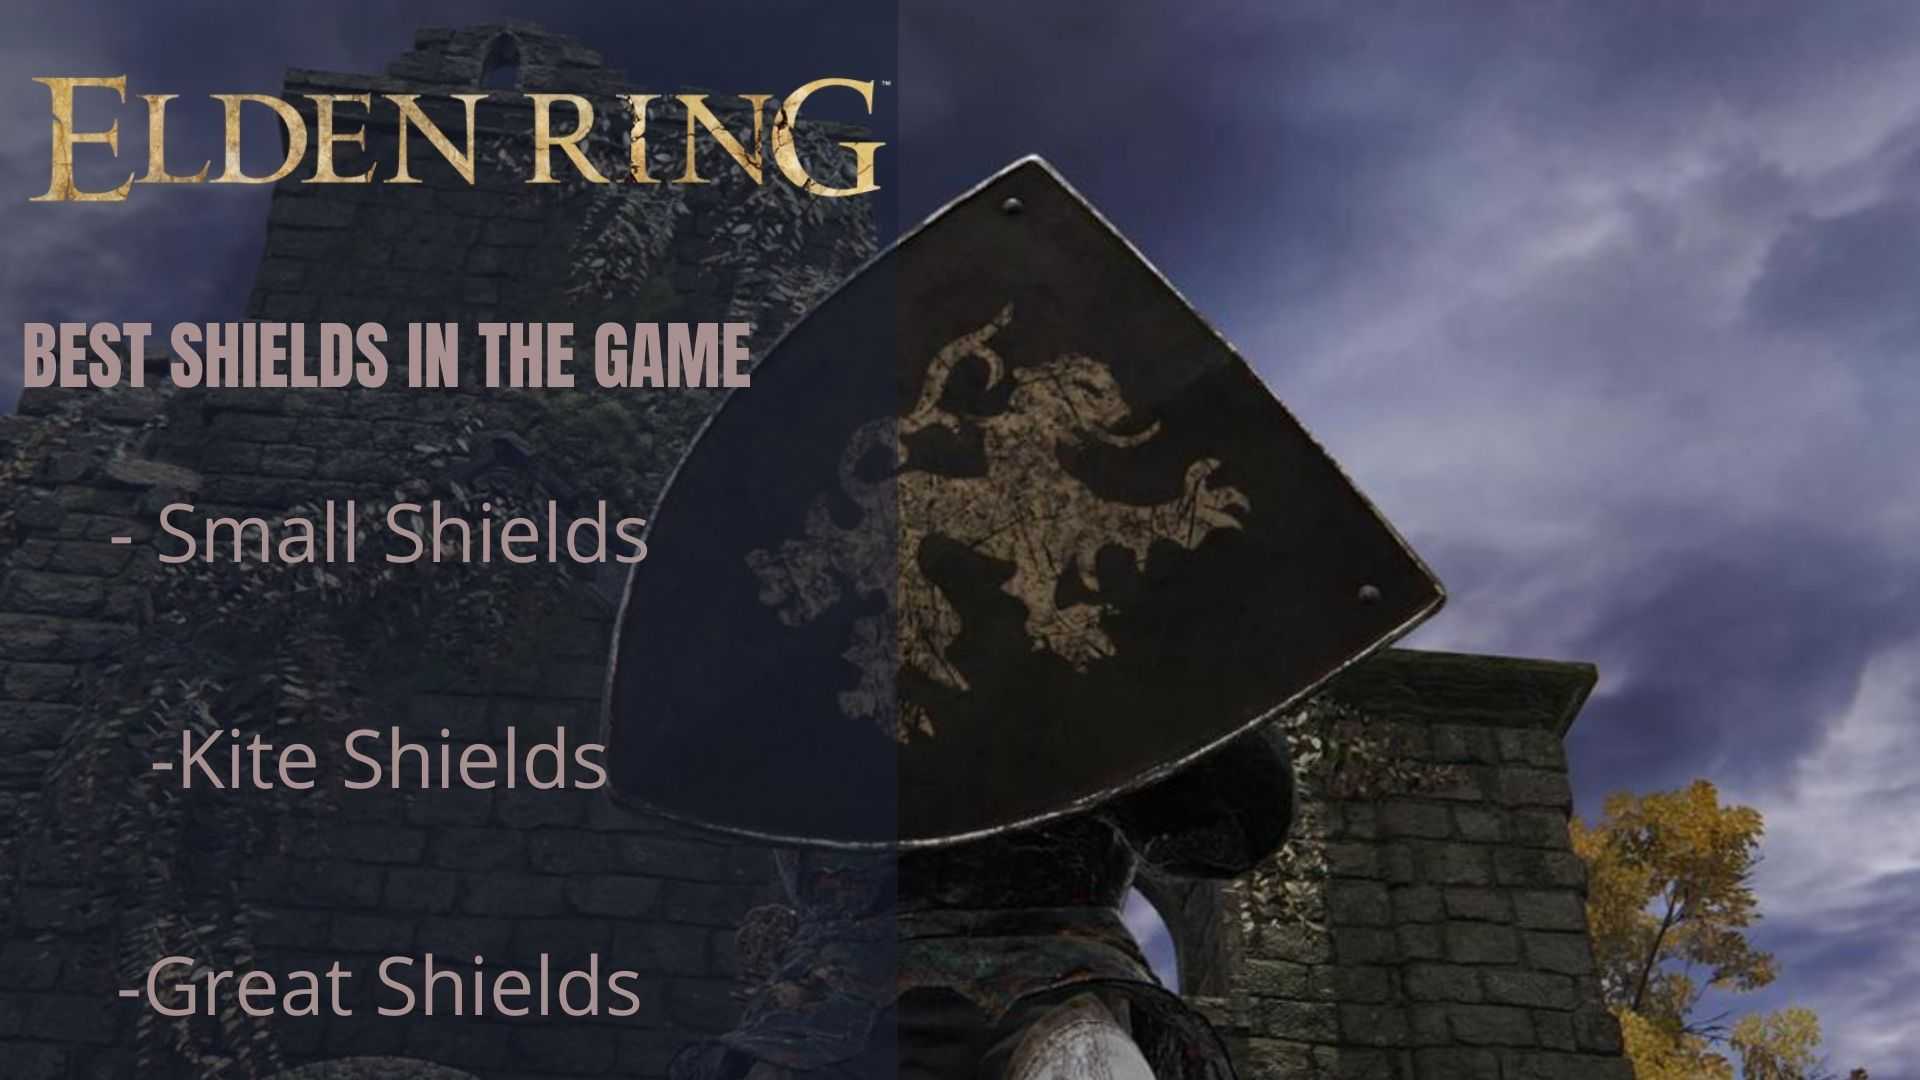 Ranking Best Elden Ring Shields